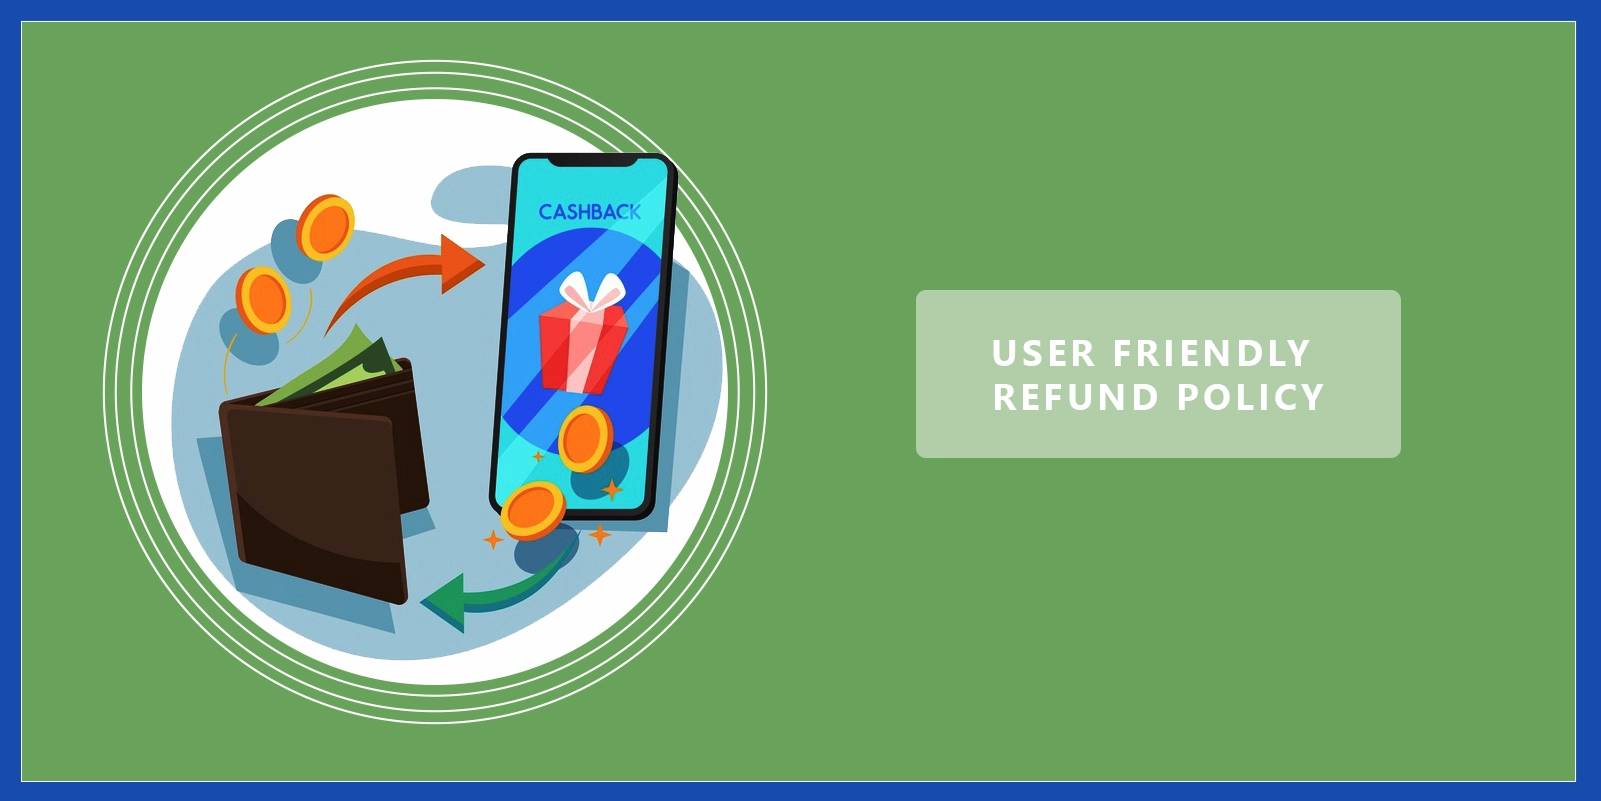  User friendly refund policy